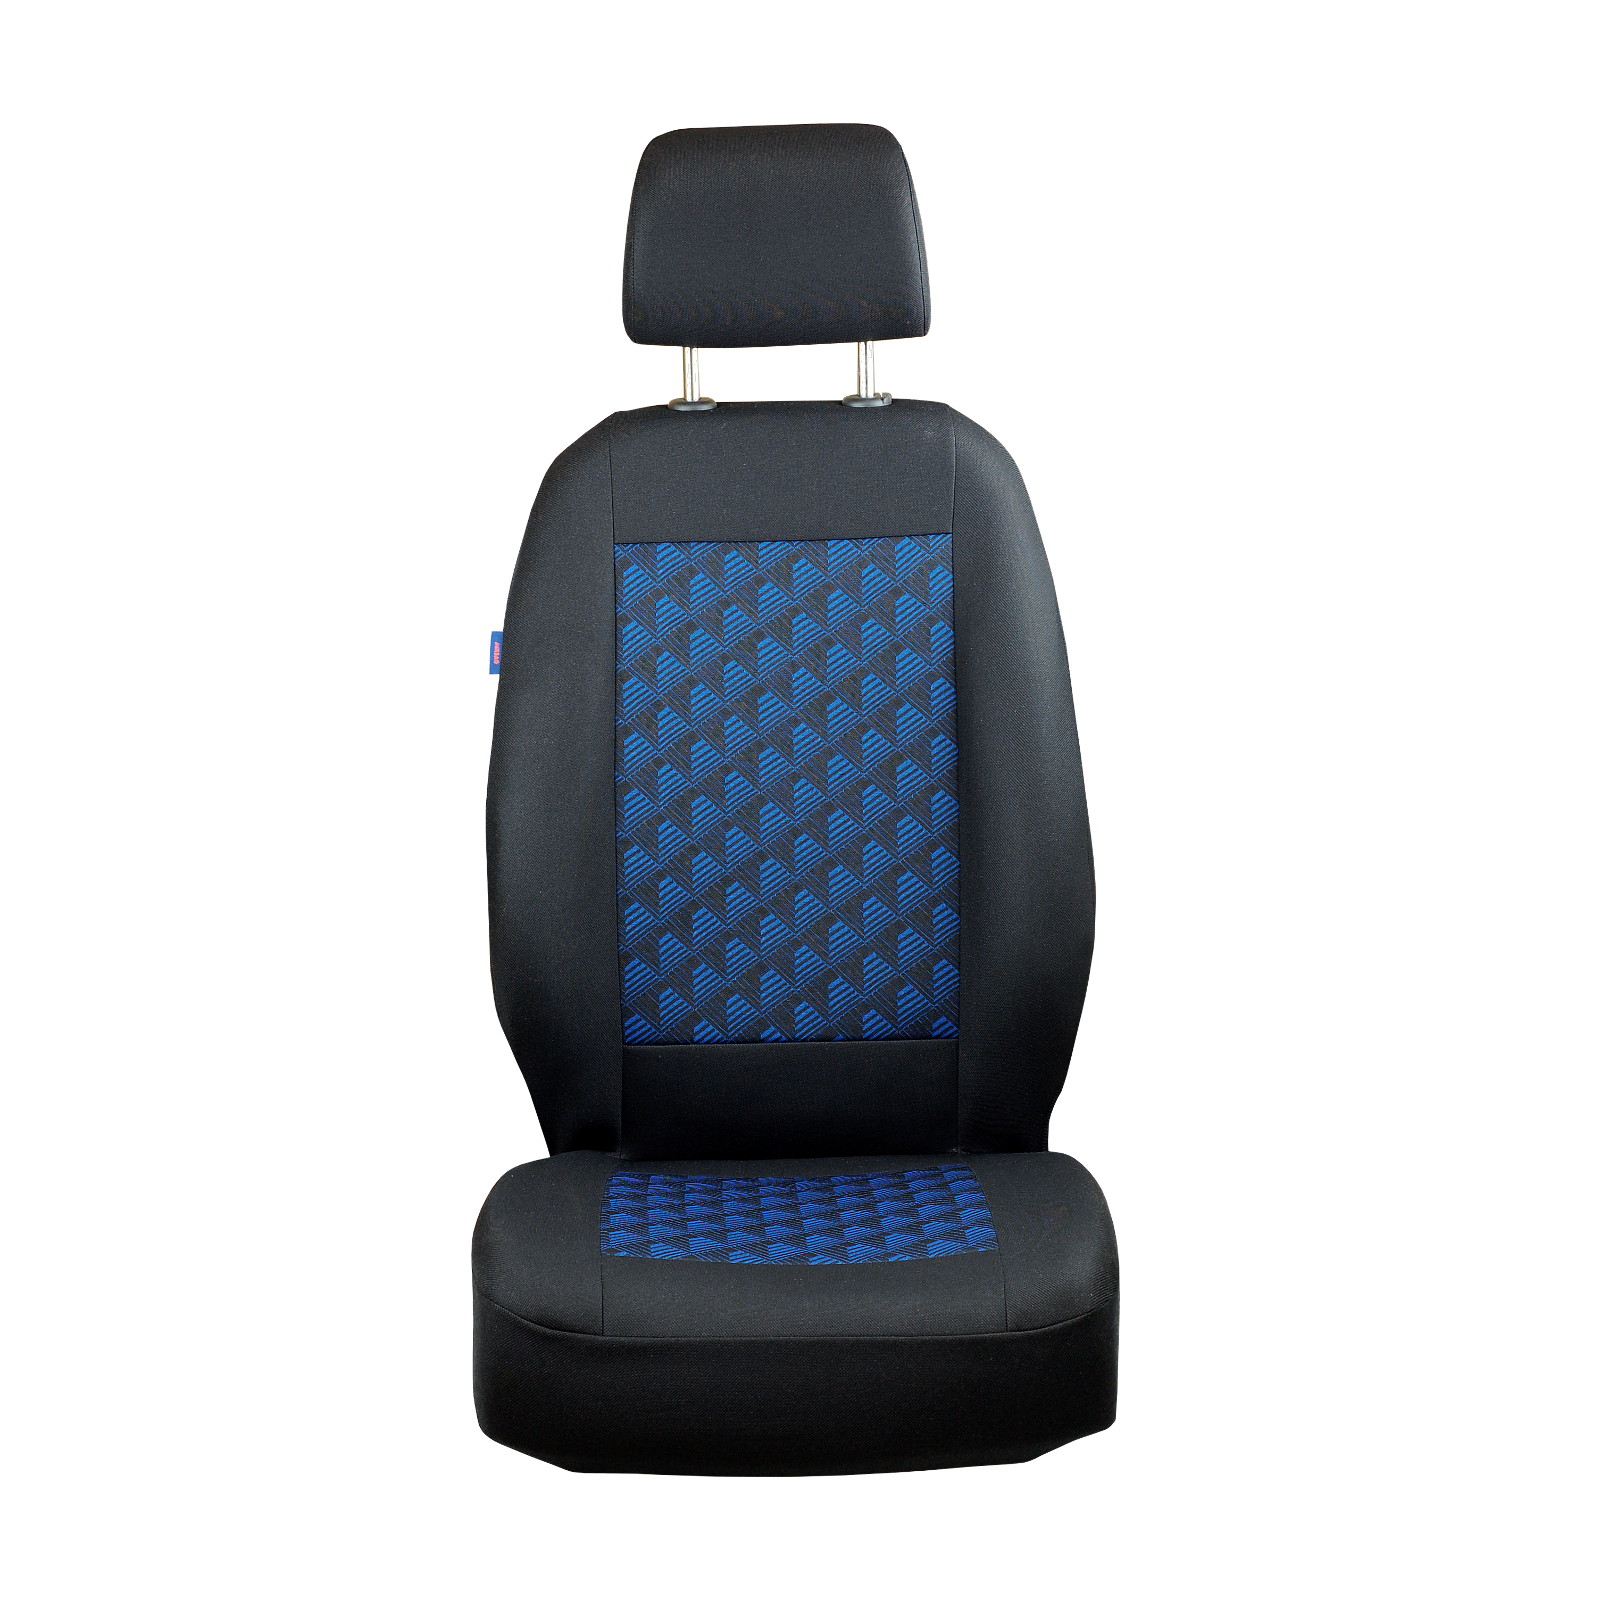 CAR SEAT COVERS FOR HONDA HRV HR-V FRONT SEATS BLACK BLUE 3D EFFECT | eBay